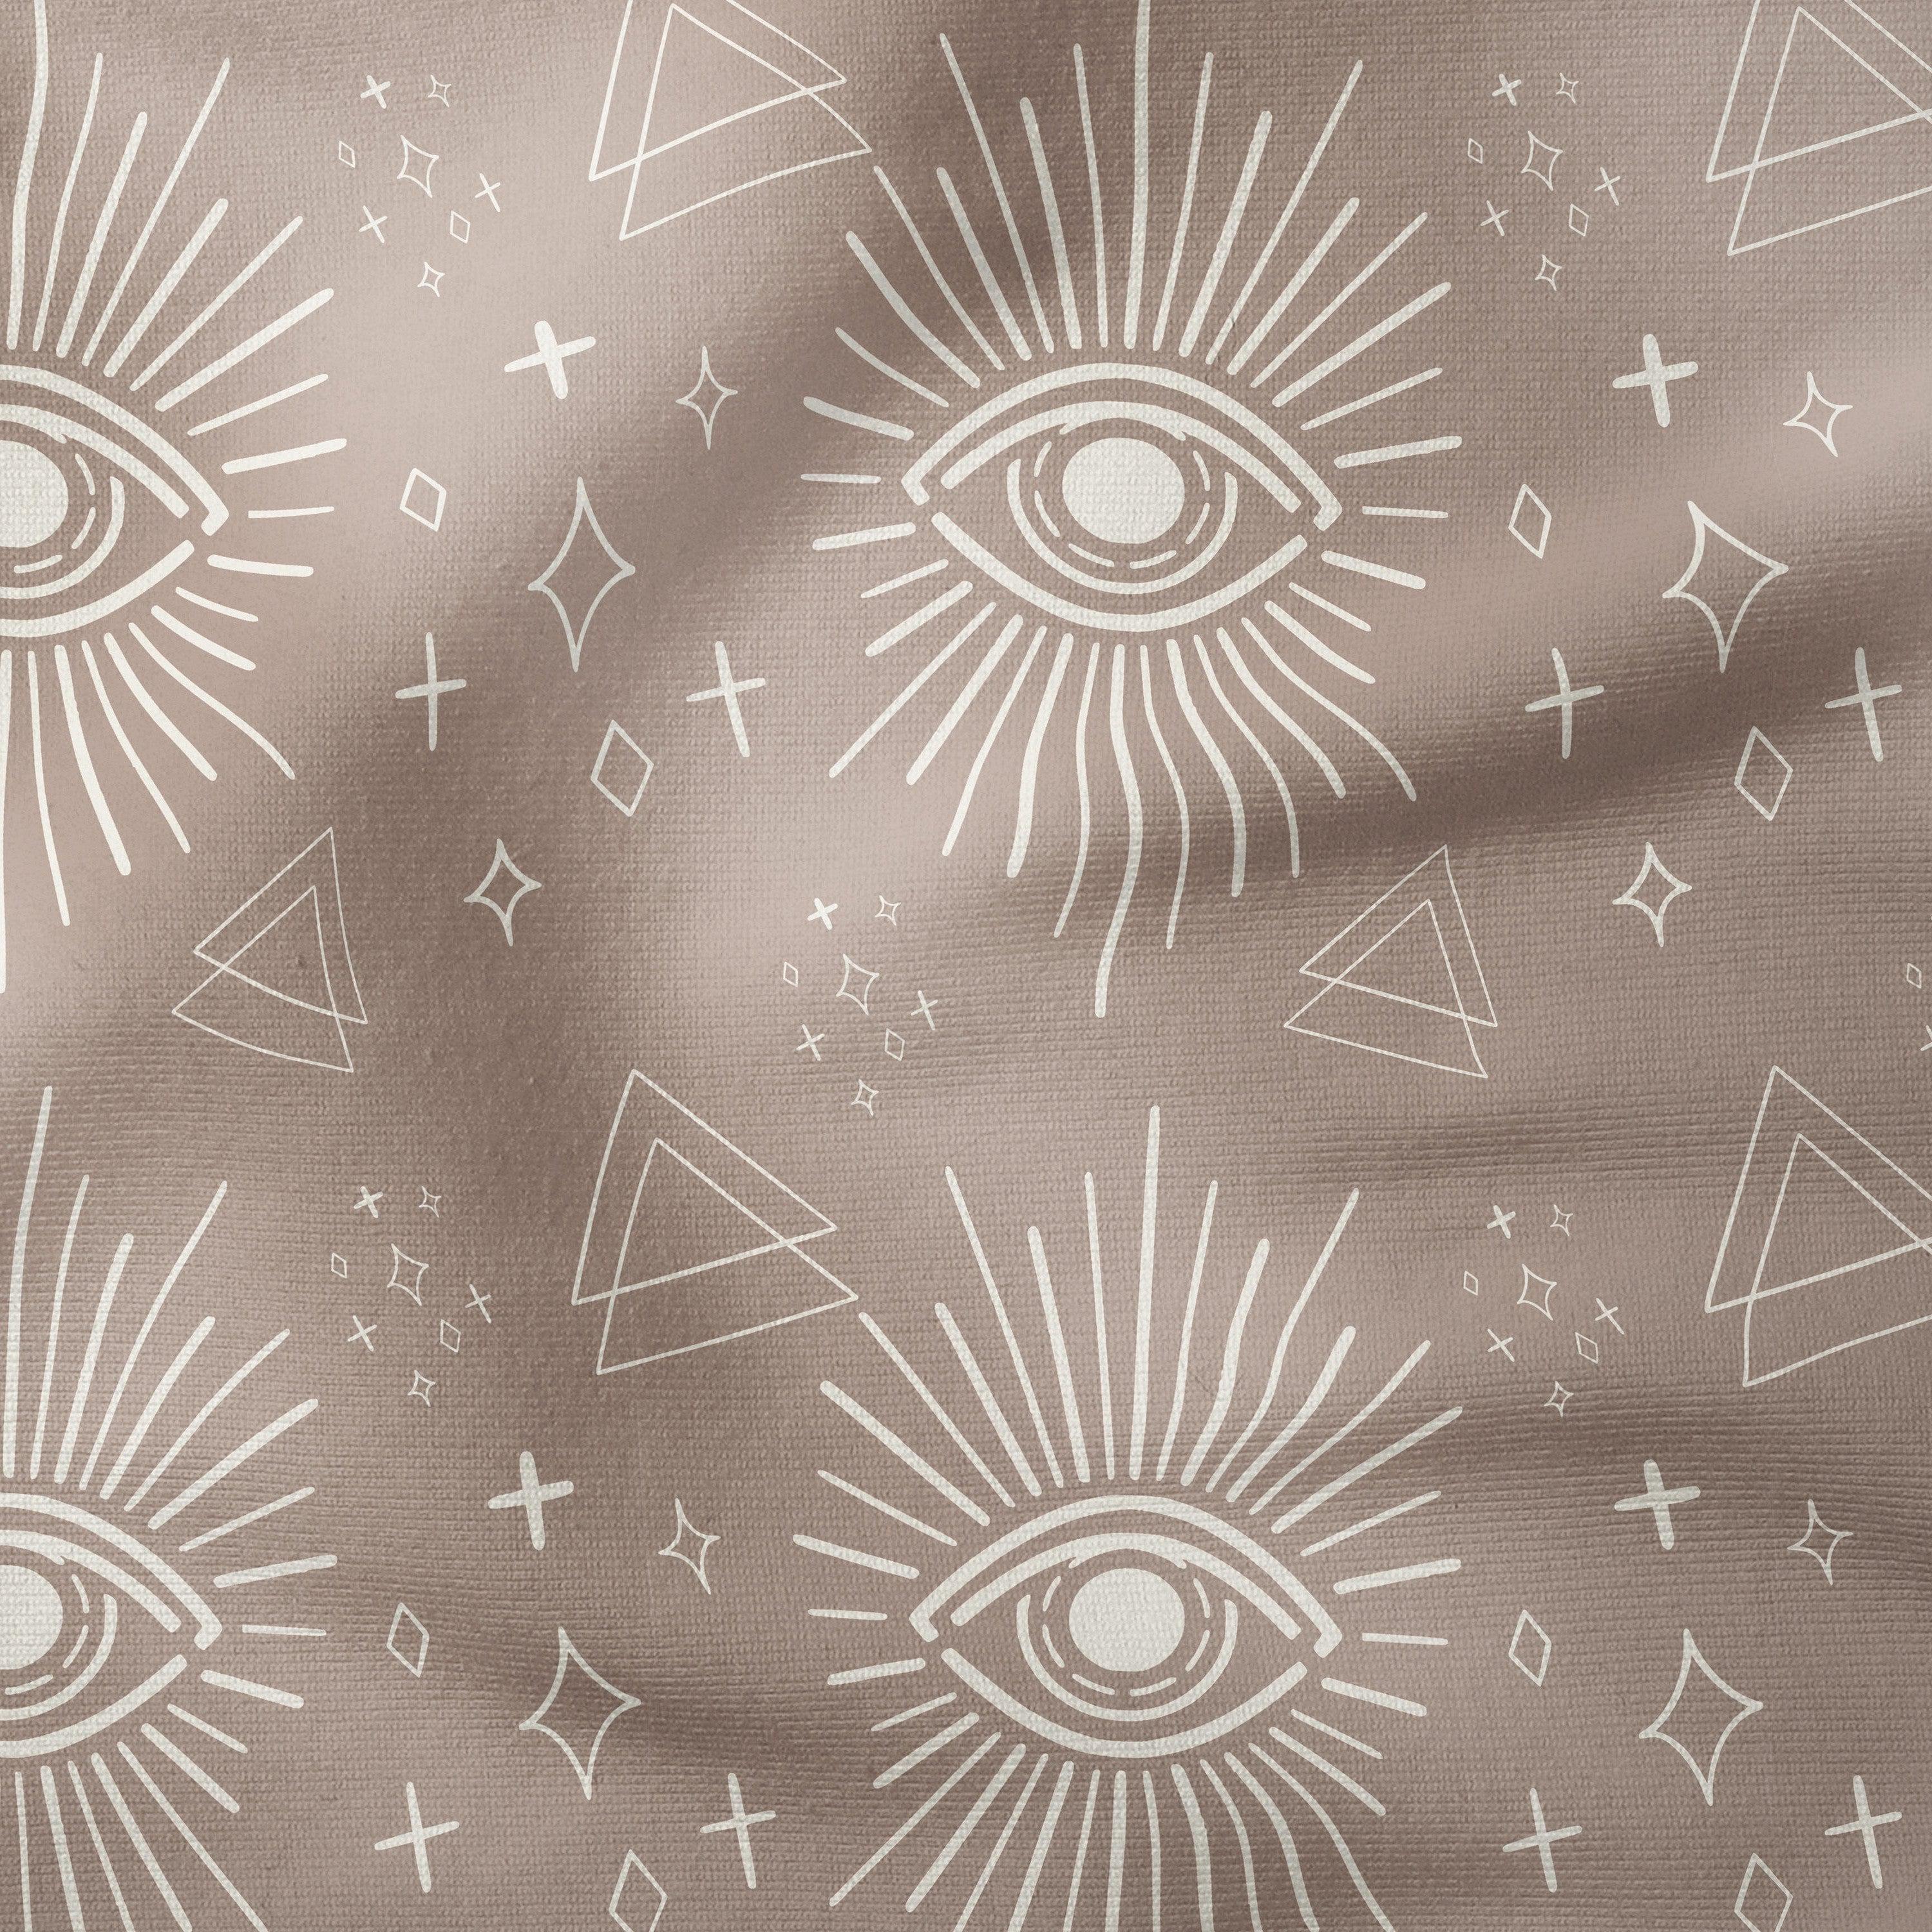 Mystic Eyes-Art Print Fabric-Melco Fabrics-Tofu on Chocolate-Cotton Poplin (110gsm)-Melco Fabrics-Online-Fabric-Shop-Australia